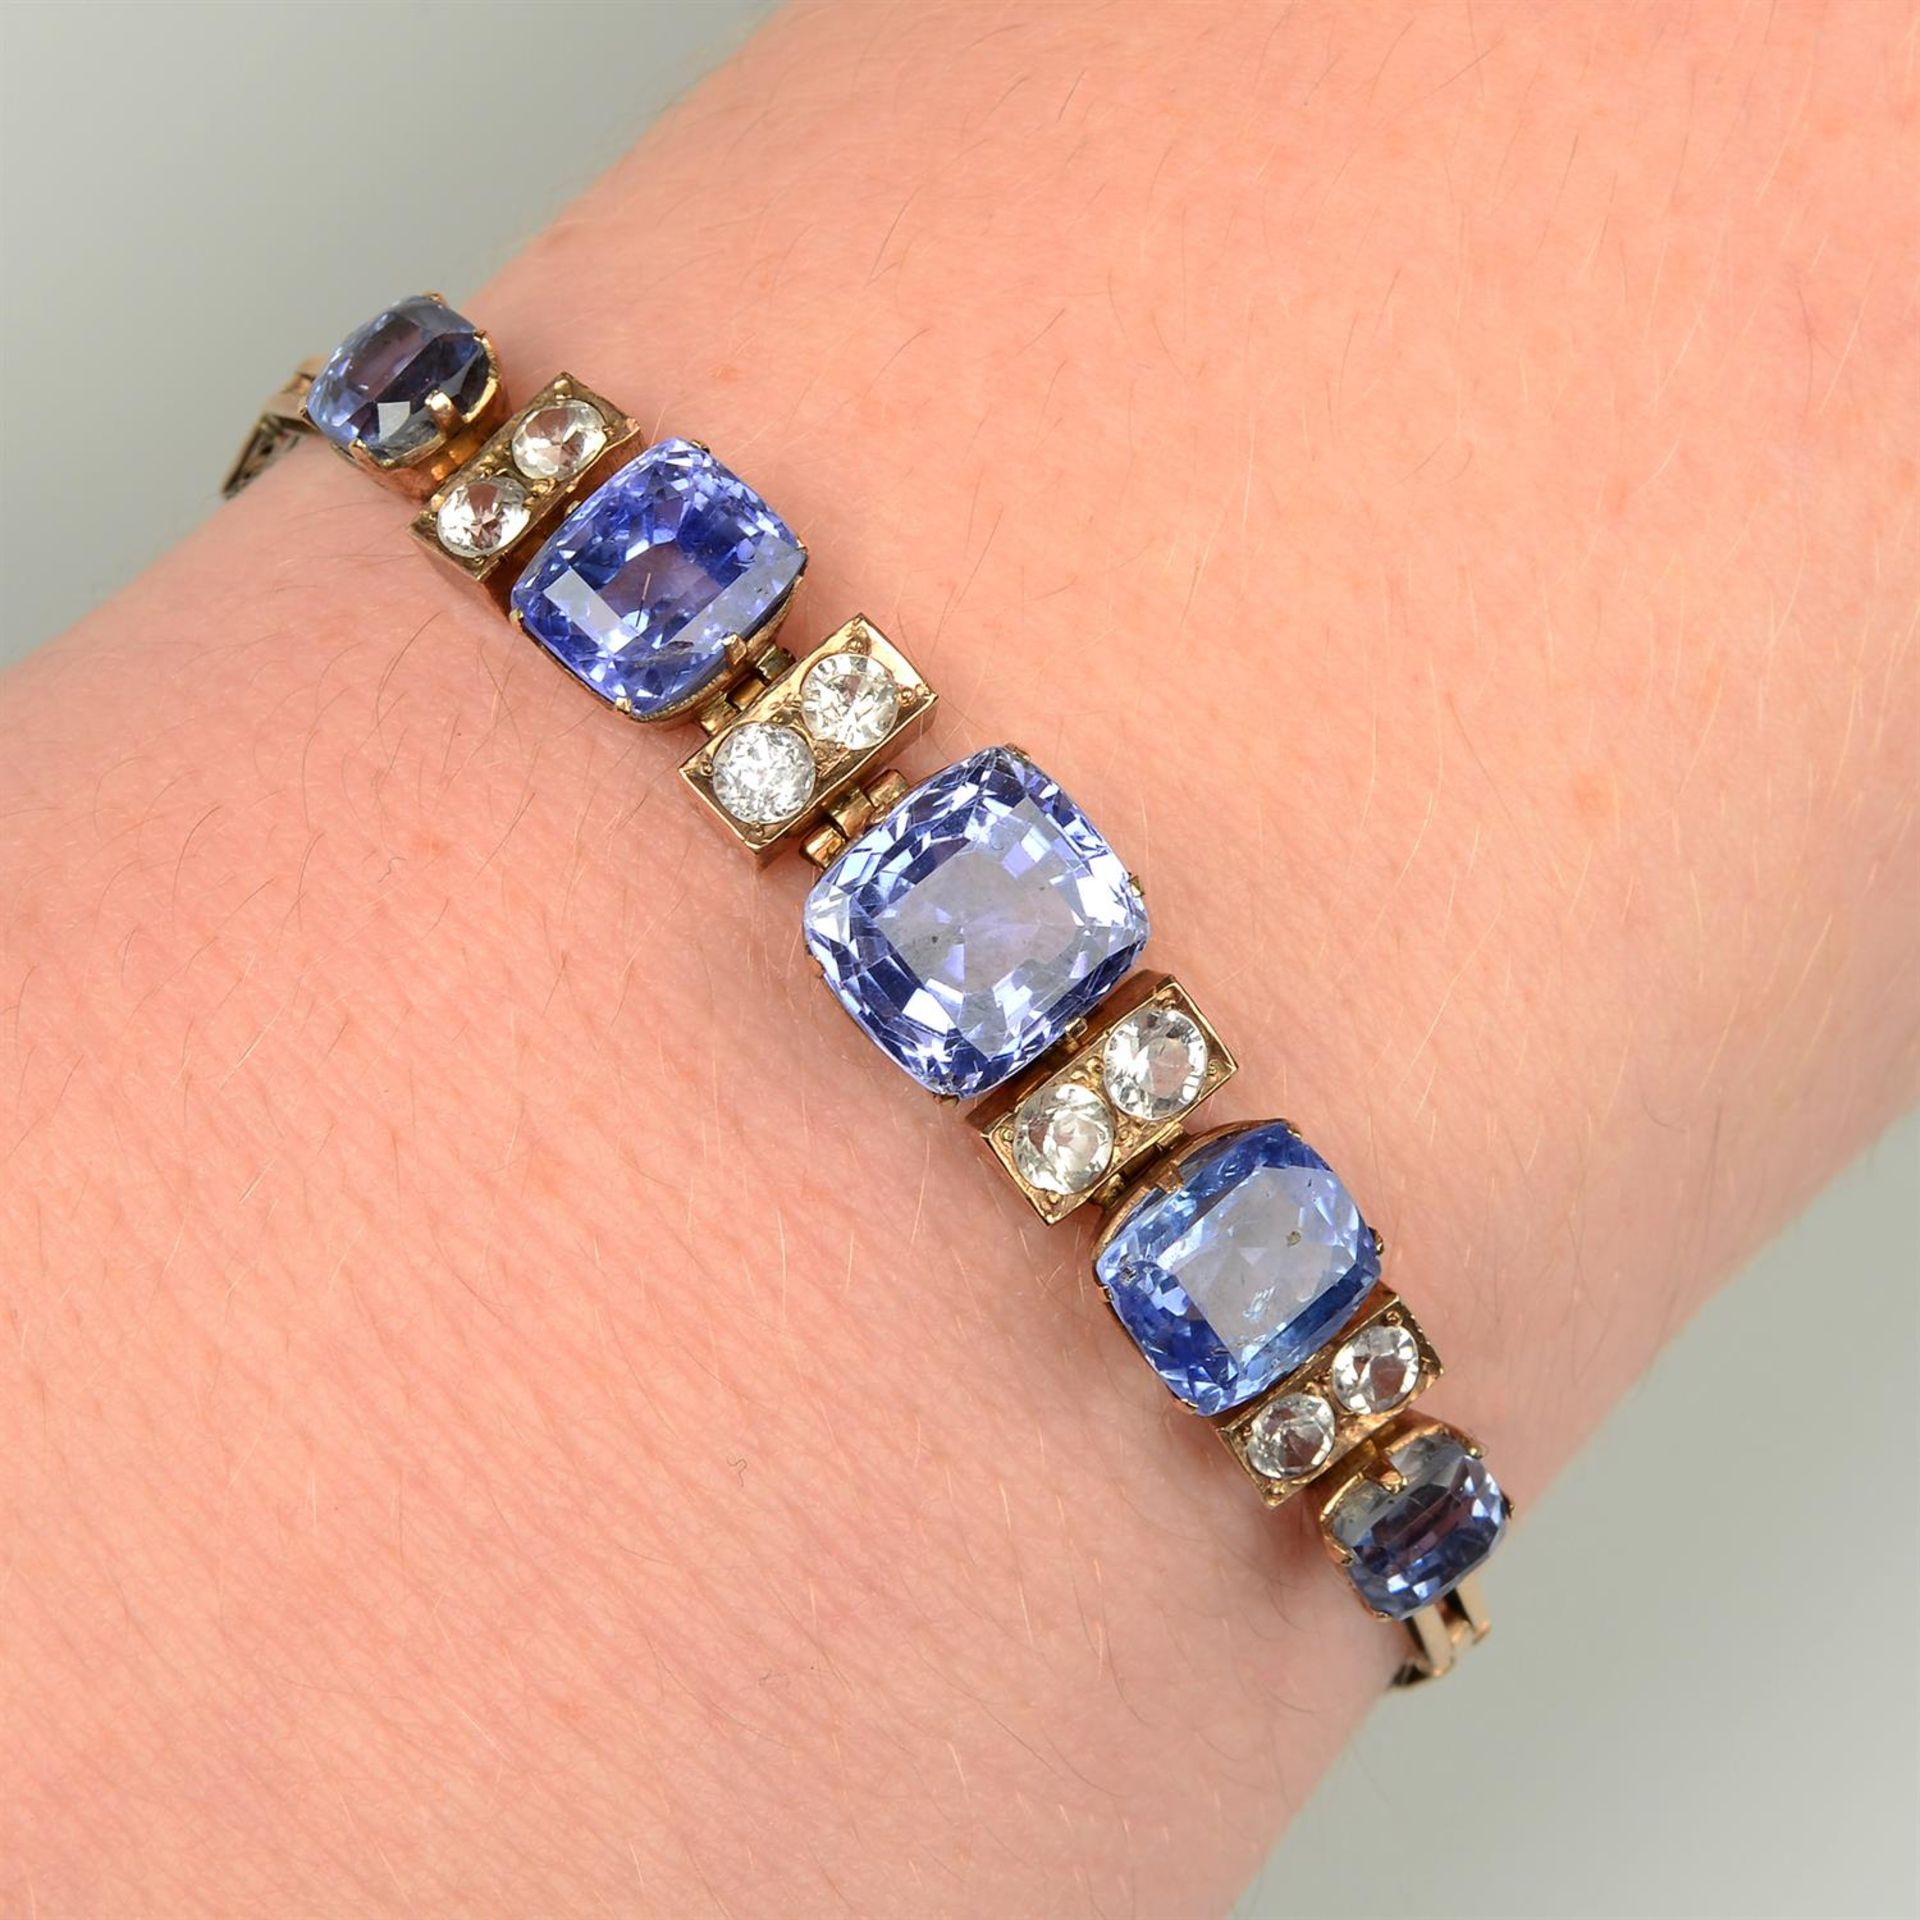 A Sri Lankan sapphire and colourless sapphire bracelet.